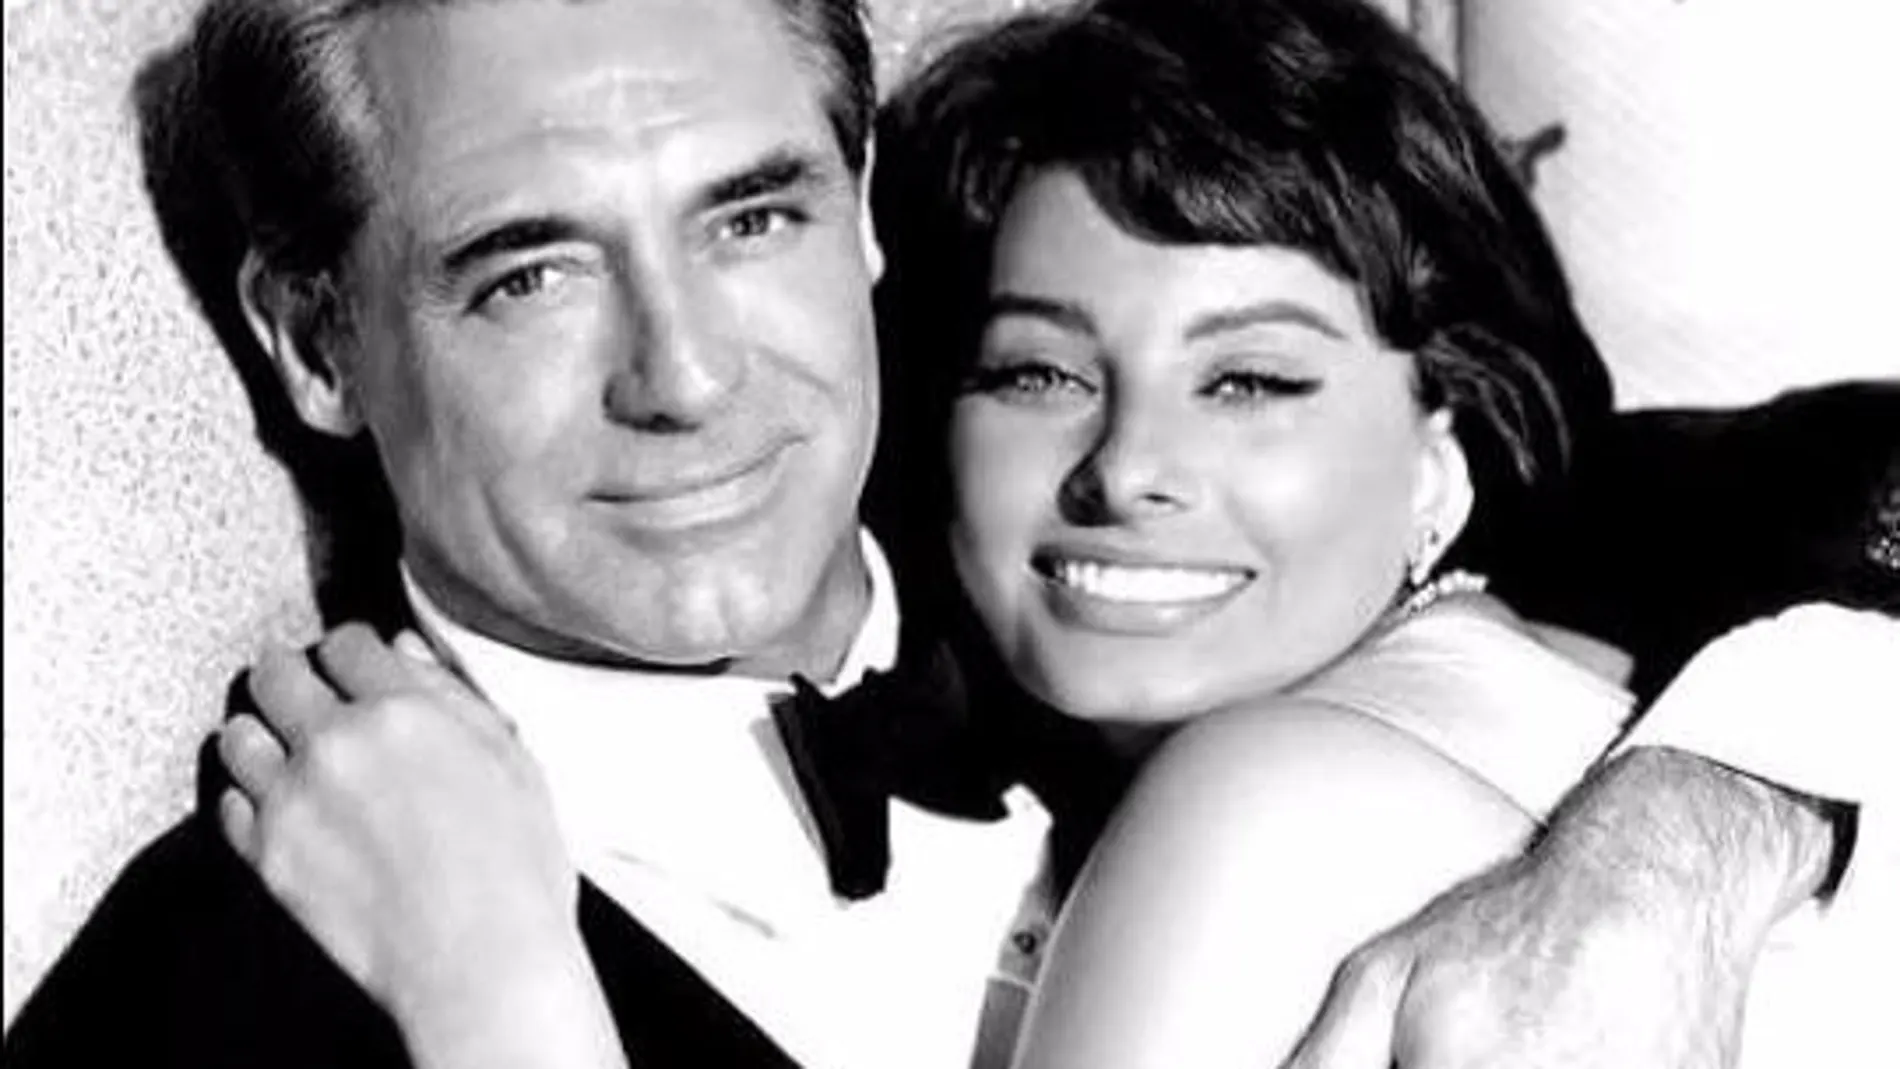 Cary Grant y Sophia Loren